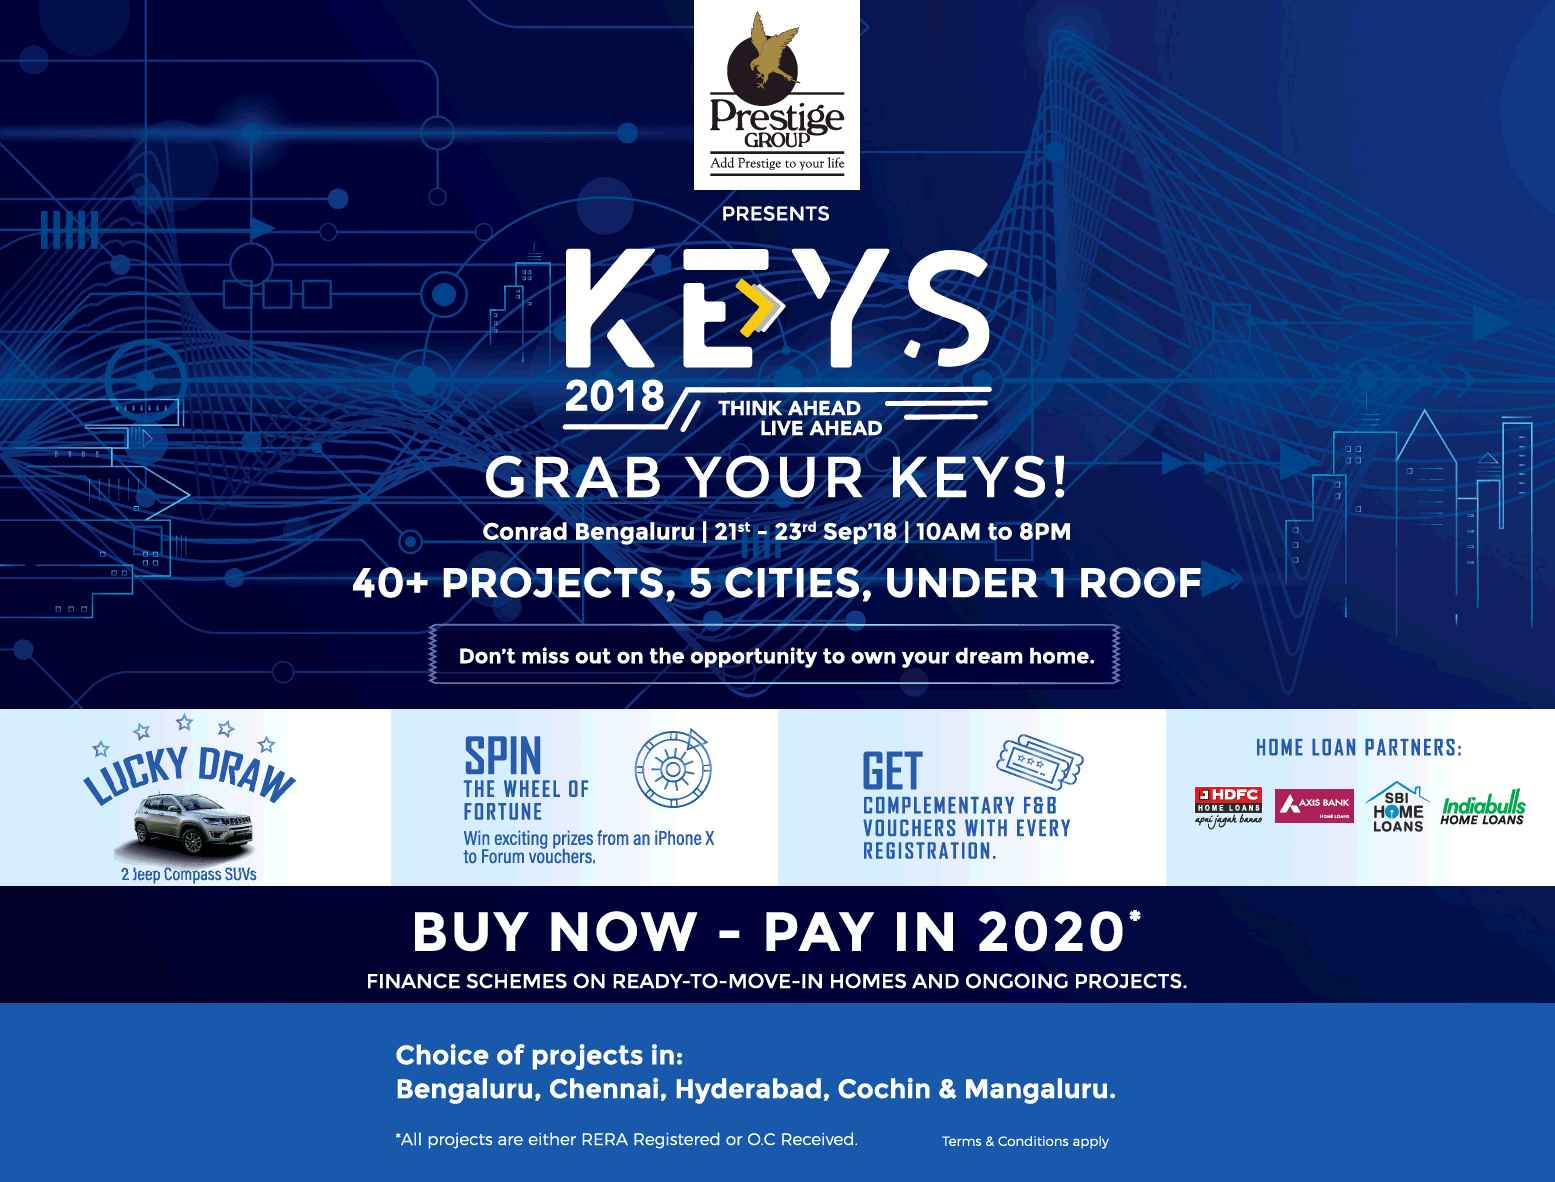 Prestige Group presents Keys 2018 in Bengaluru